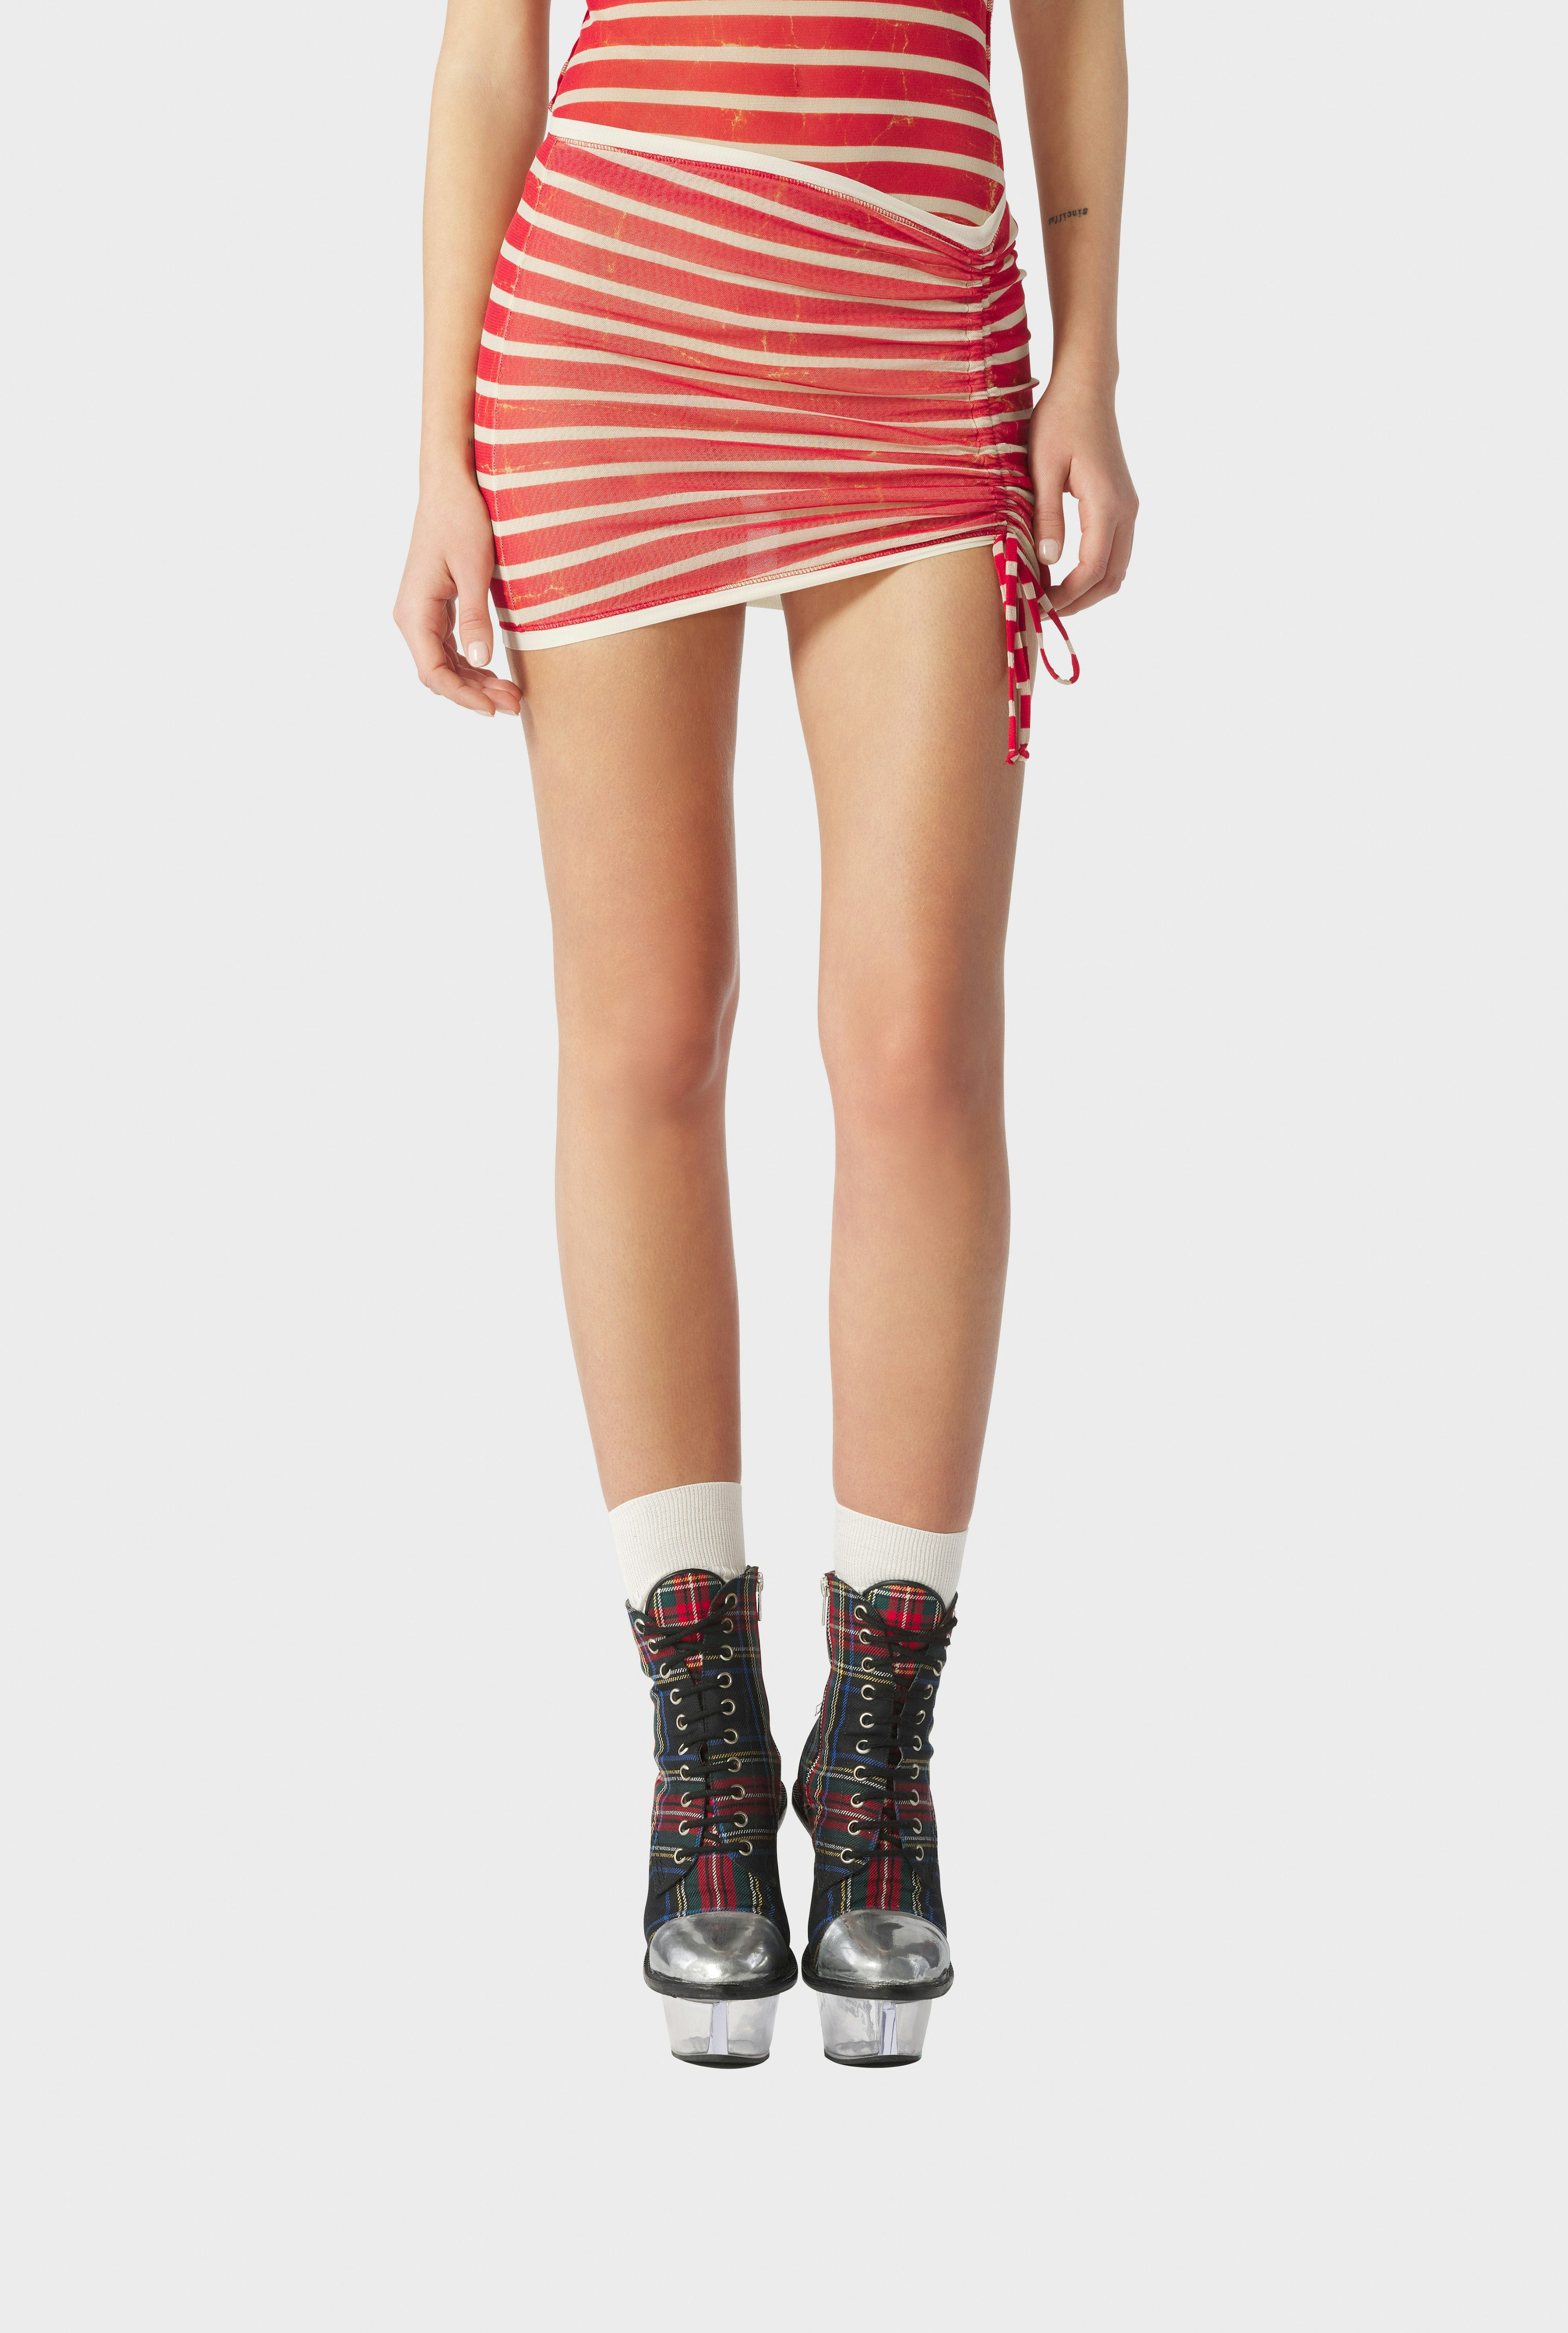 The Red “Crackling” Sailor Mini Skirt